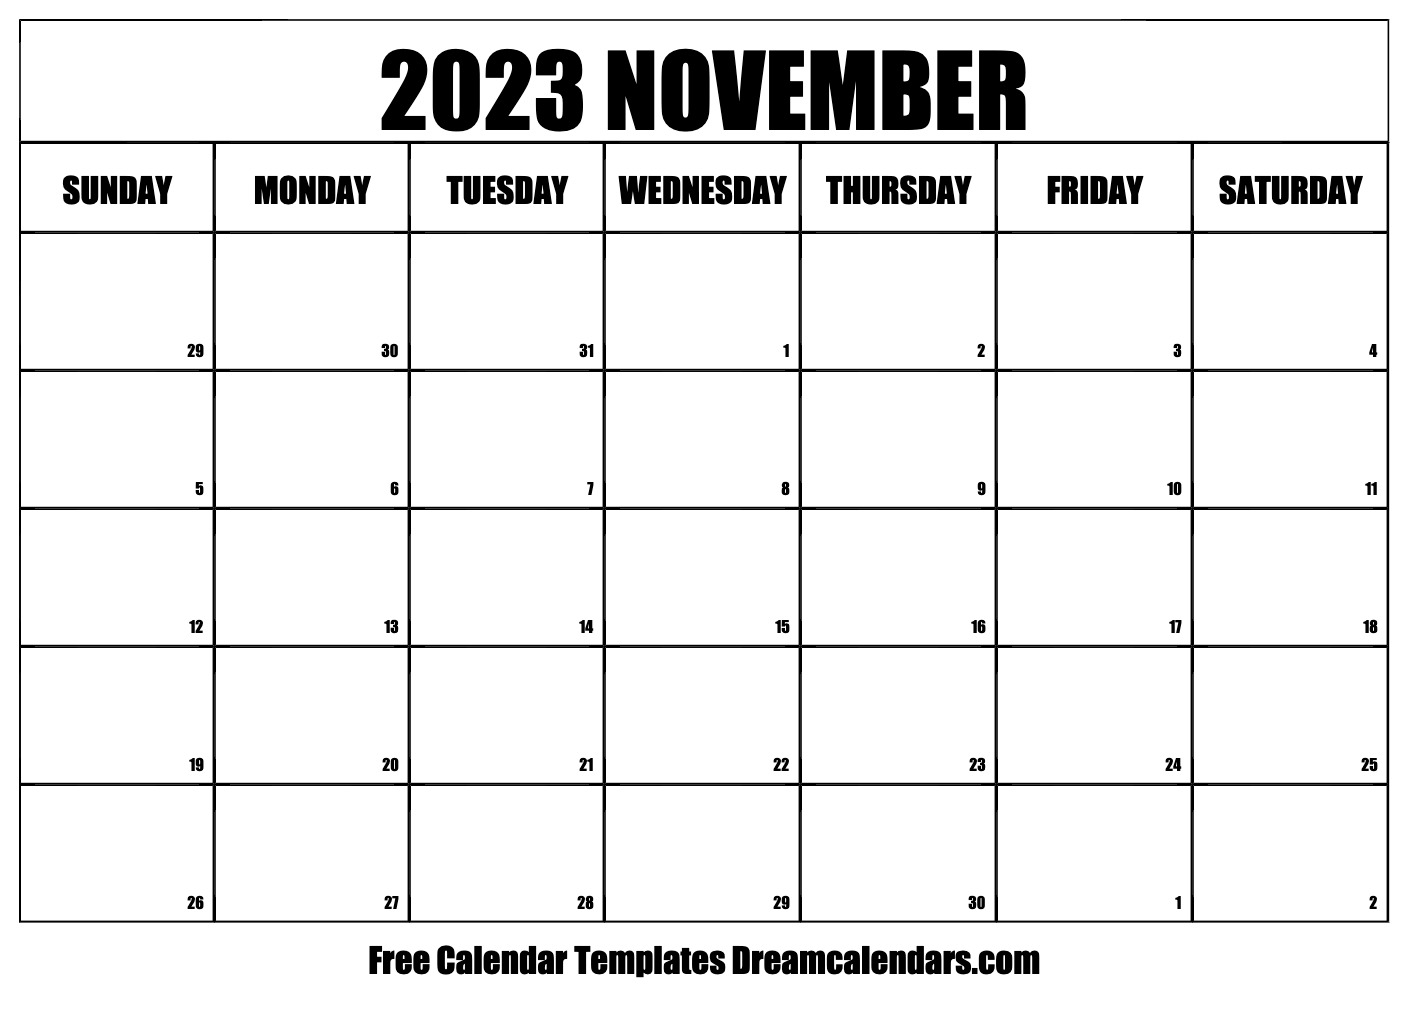 november-2023-calendar-free-printable-calendar-november-2023-calendar